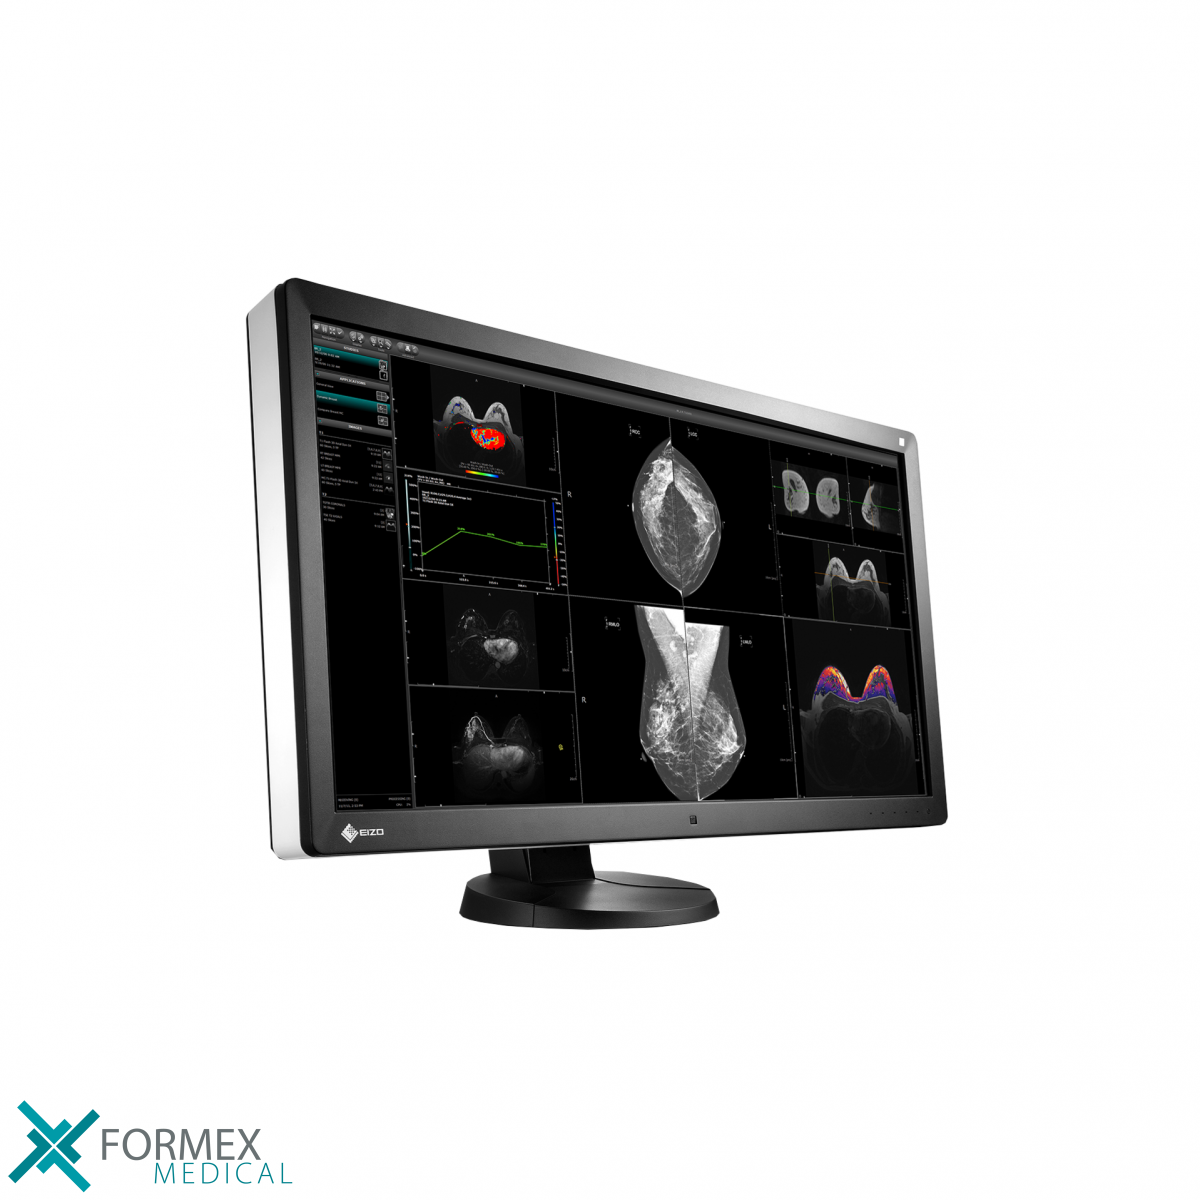 EIZO RX370 RadiForce, medical displays, medische schermen, eizo medical monitor, medische monitoren, eizo medical, medische beeldschermen, diagnostische monitoren, diagnostiek monitoren, eizo monitor